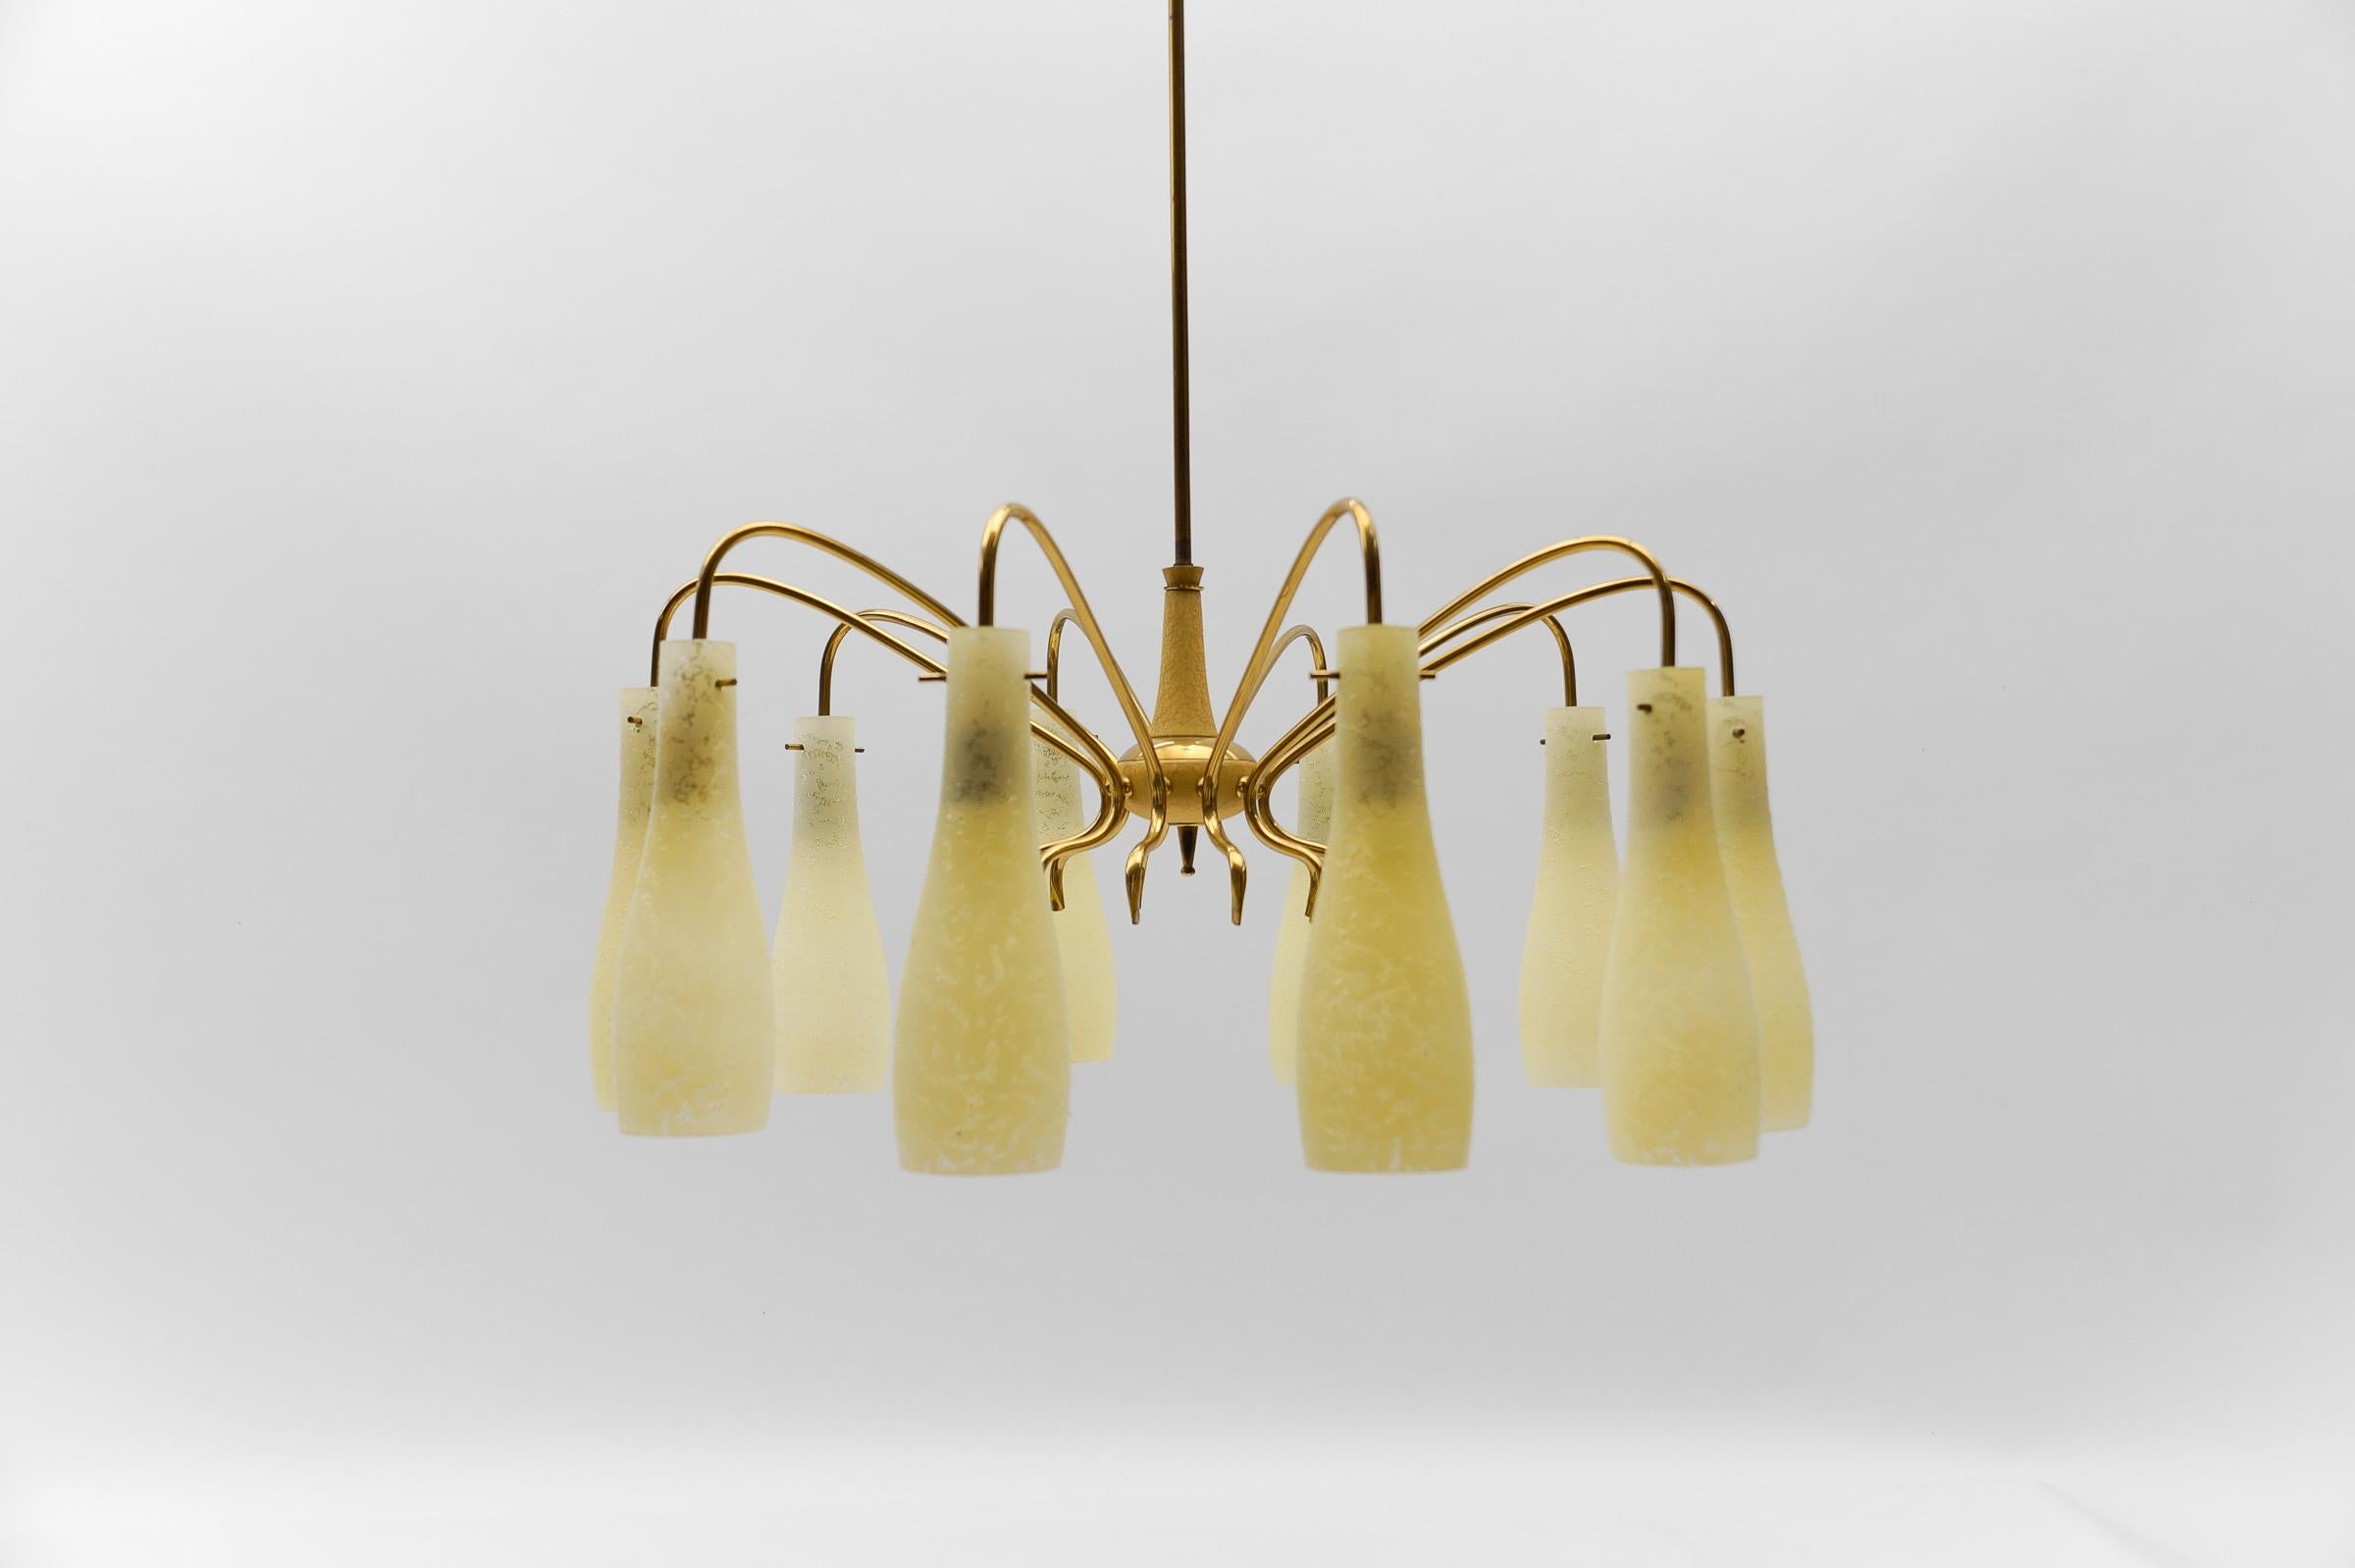 Italian Brass & Glass Sputnik Chandelier with 10 Lights, 1950s Italy For Sale